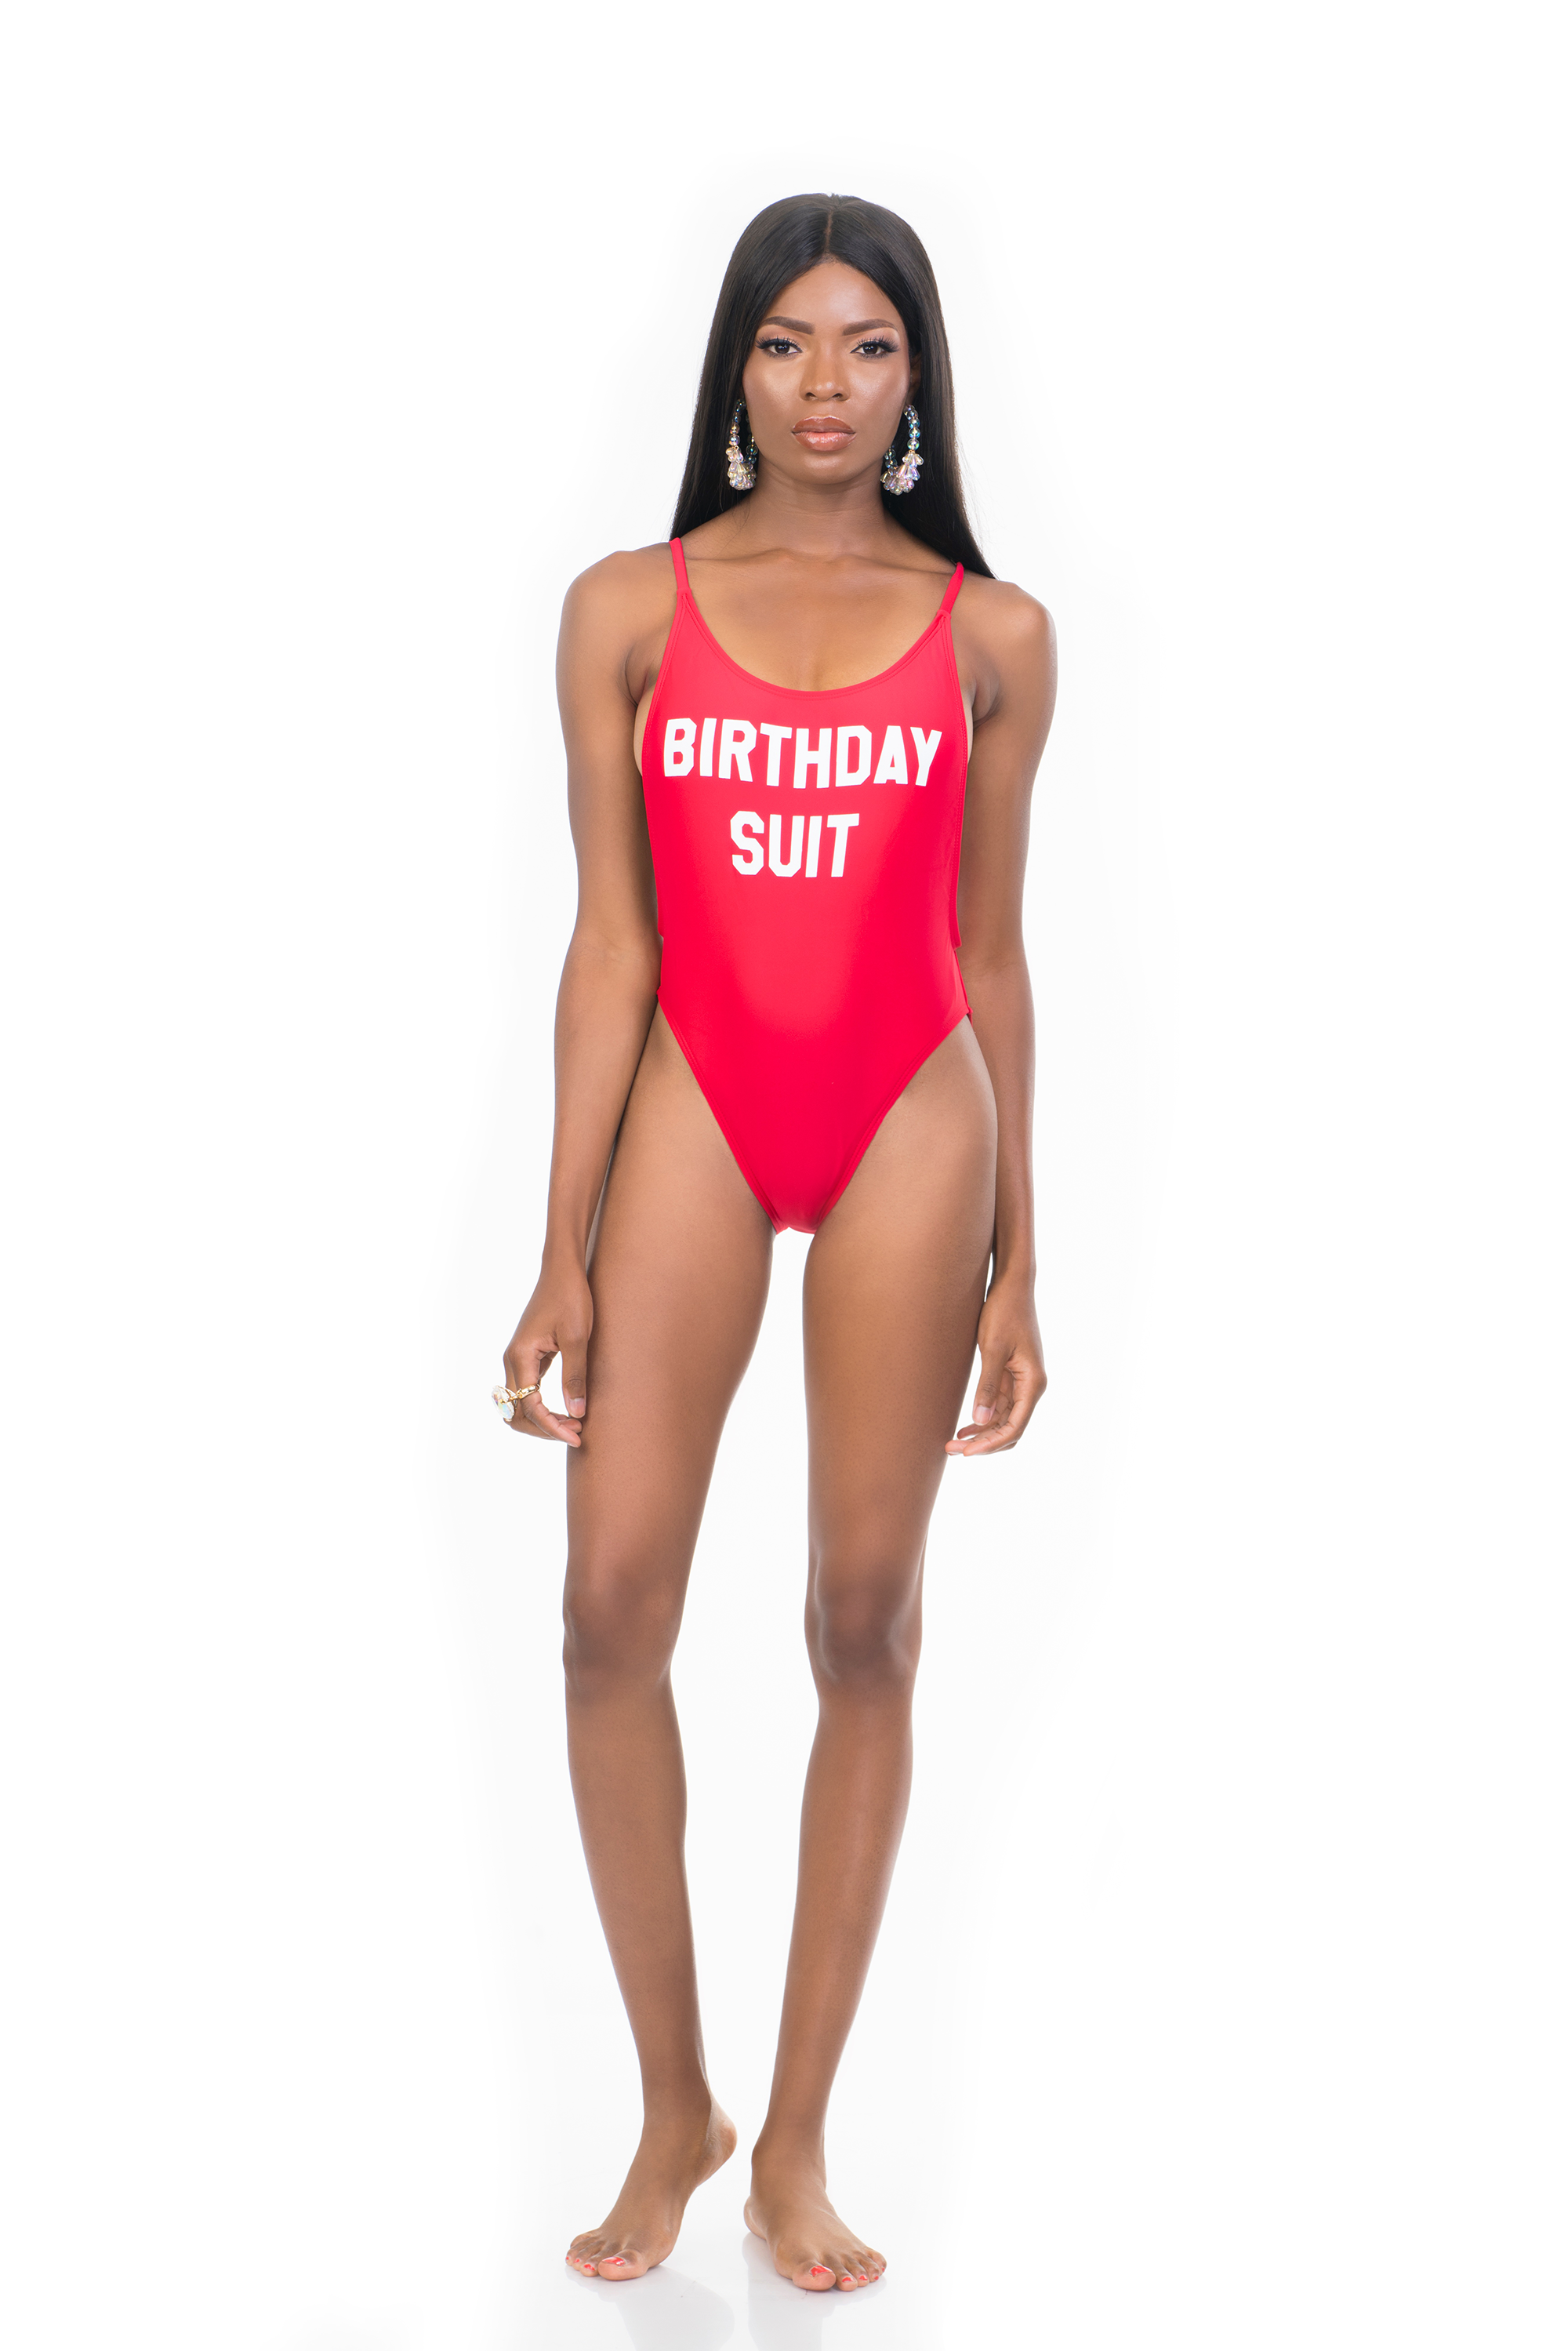 donna nelson murphy add photo women in their birthday suit